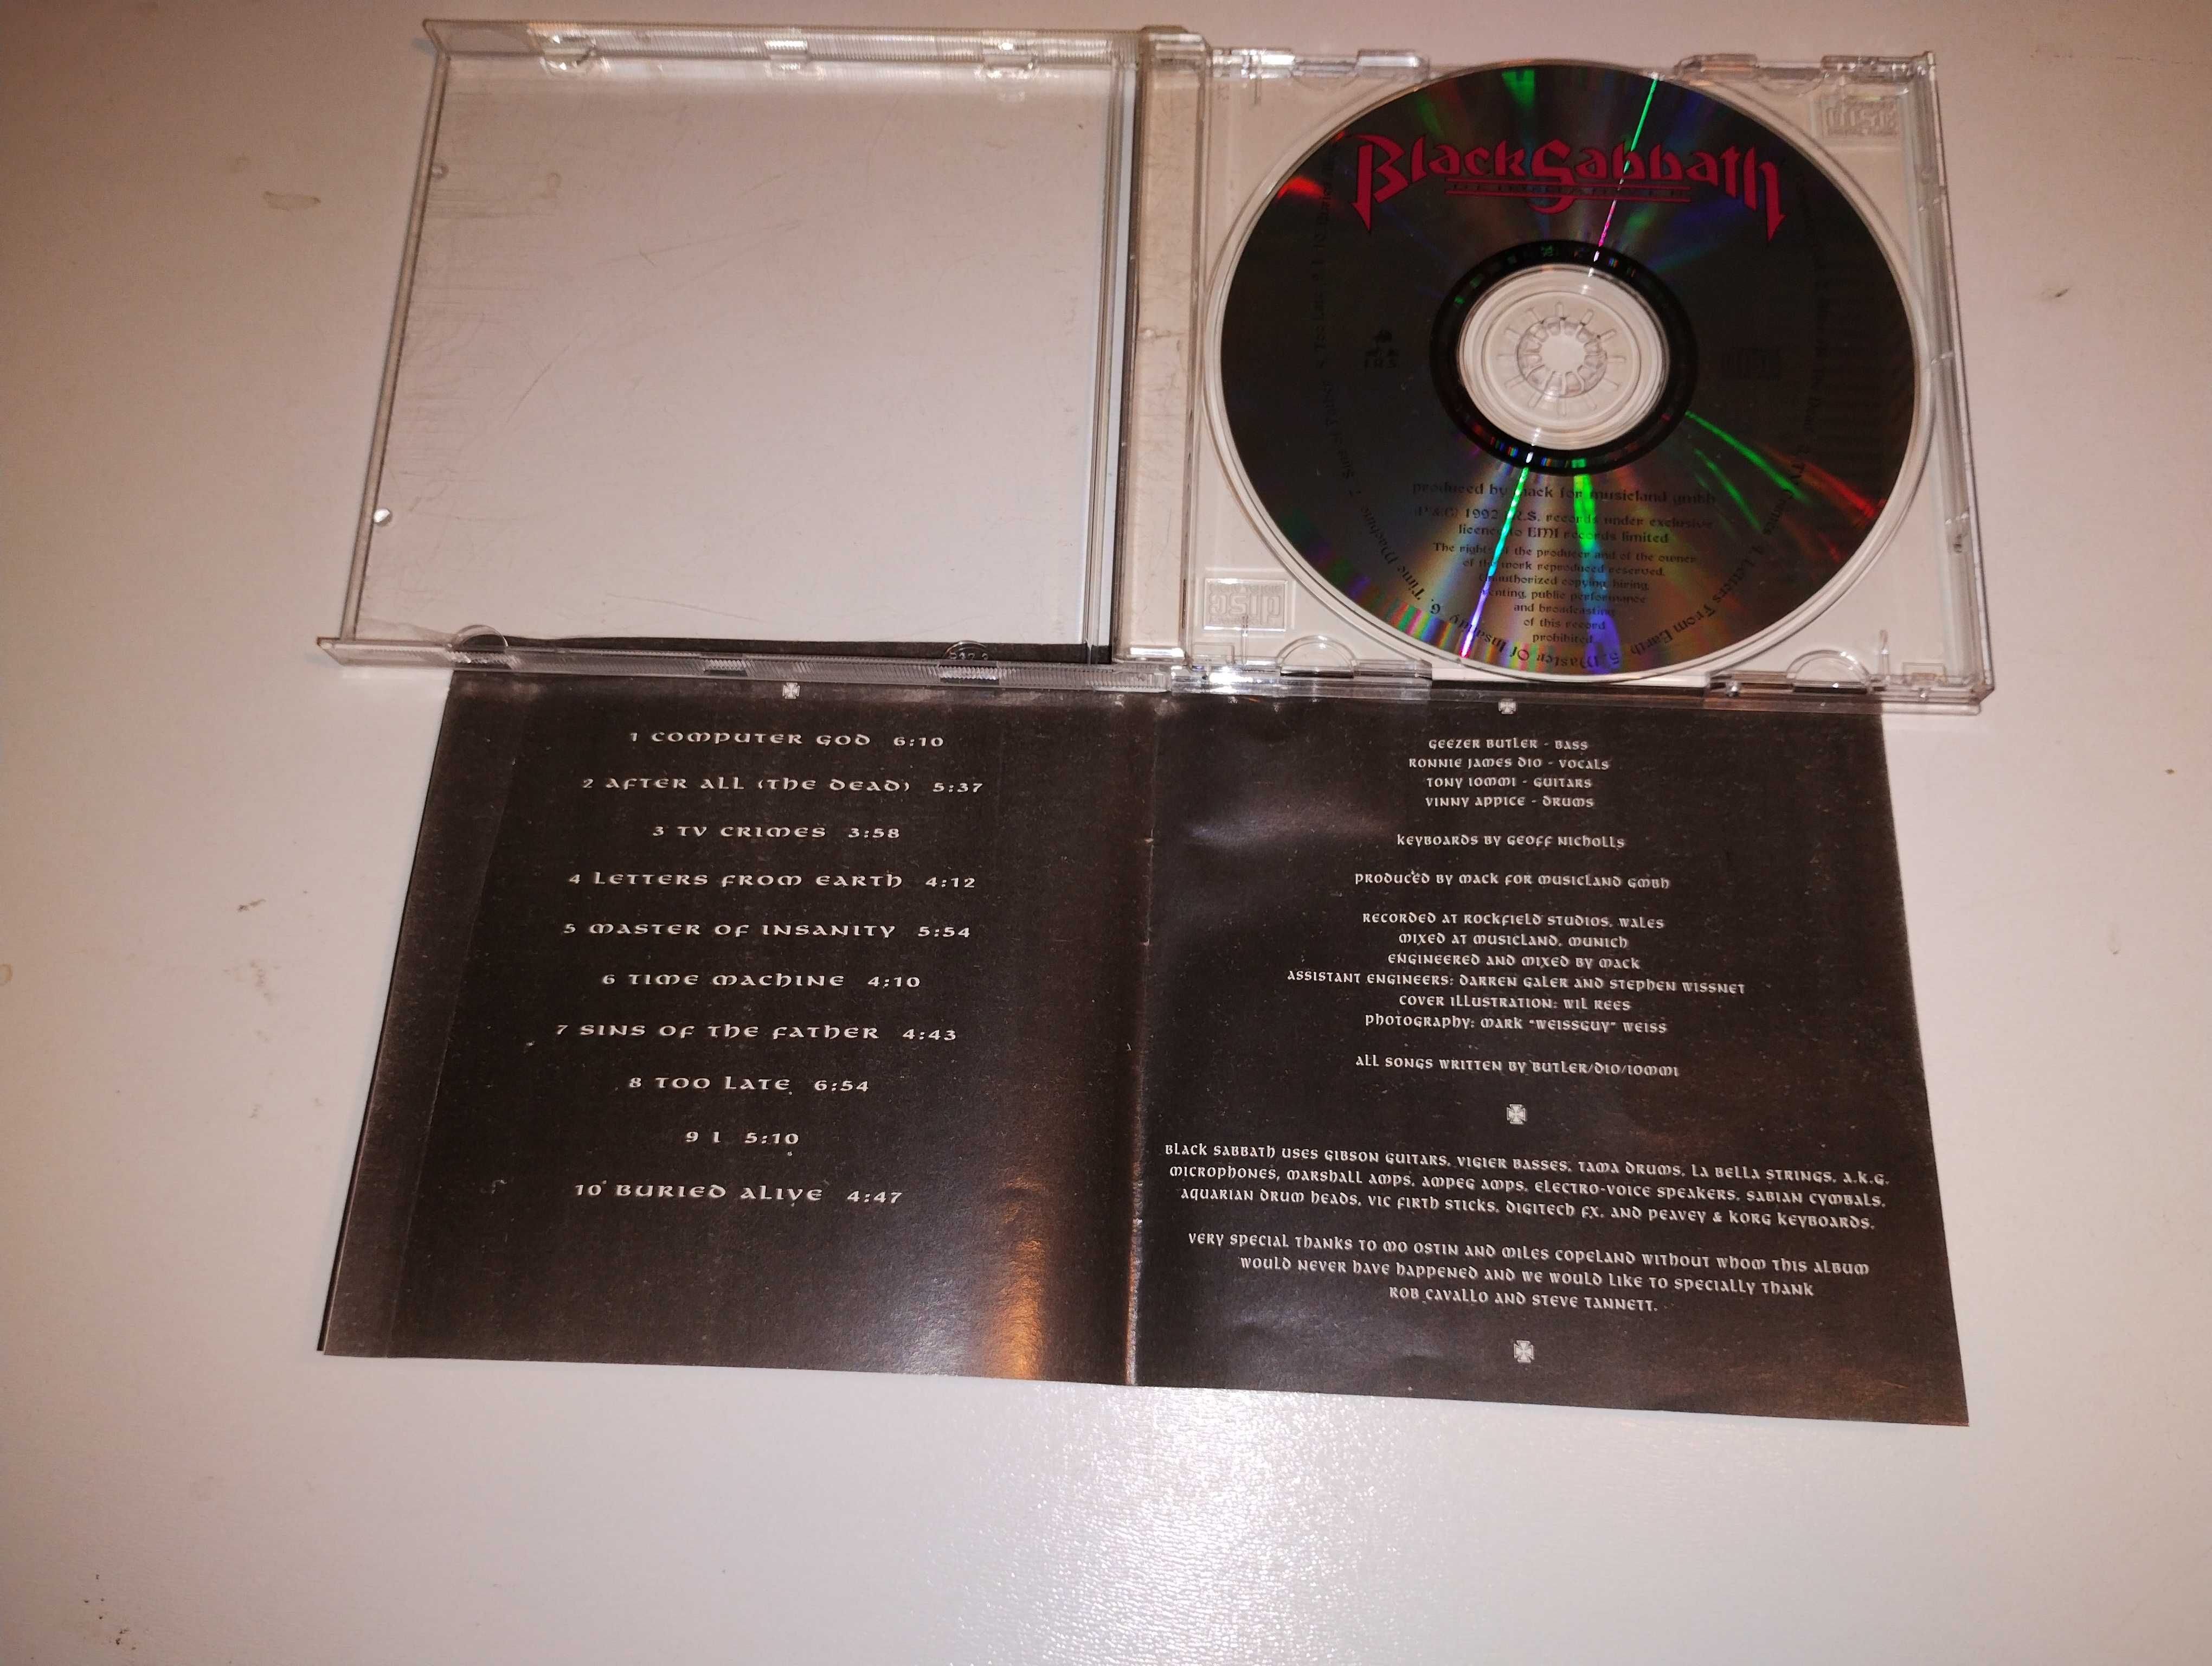 Black Sabbath Dehumanizer CD